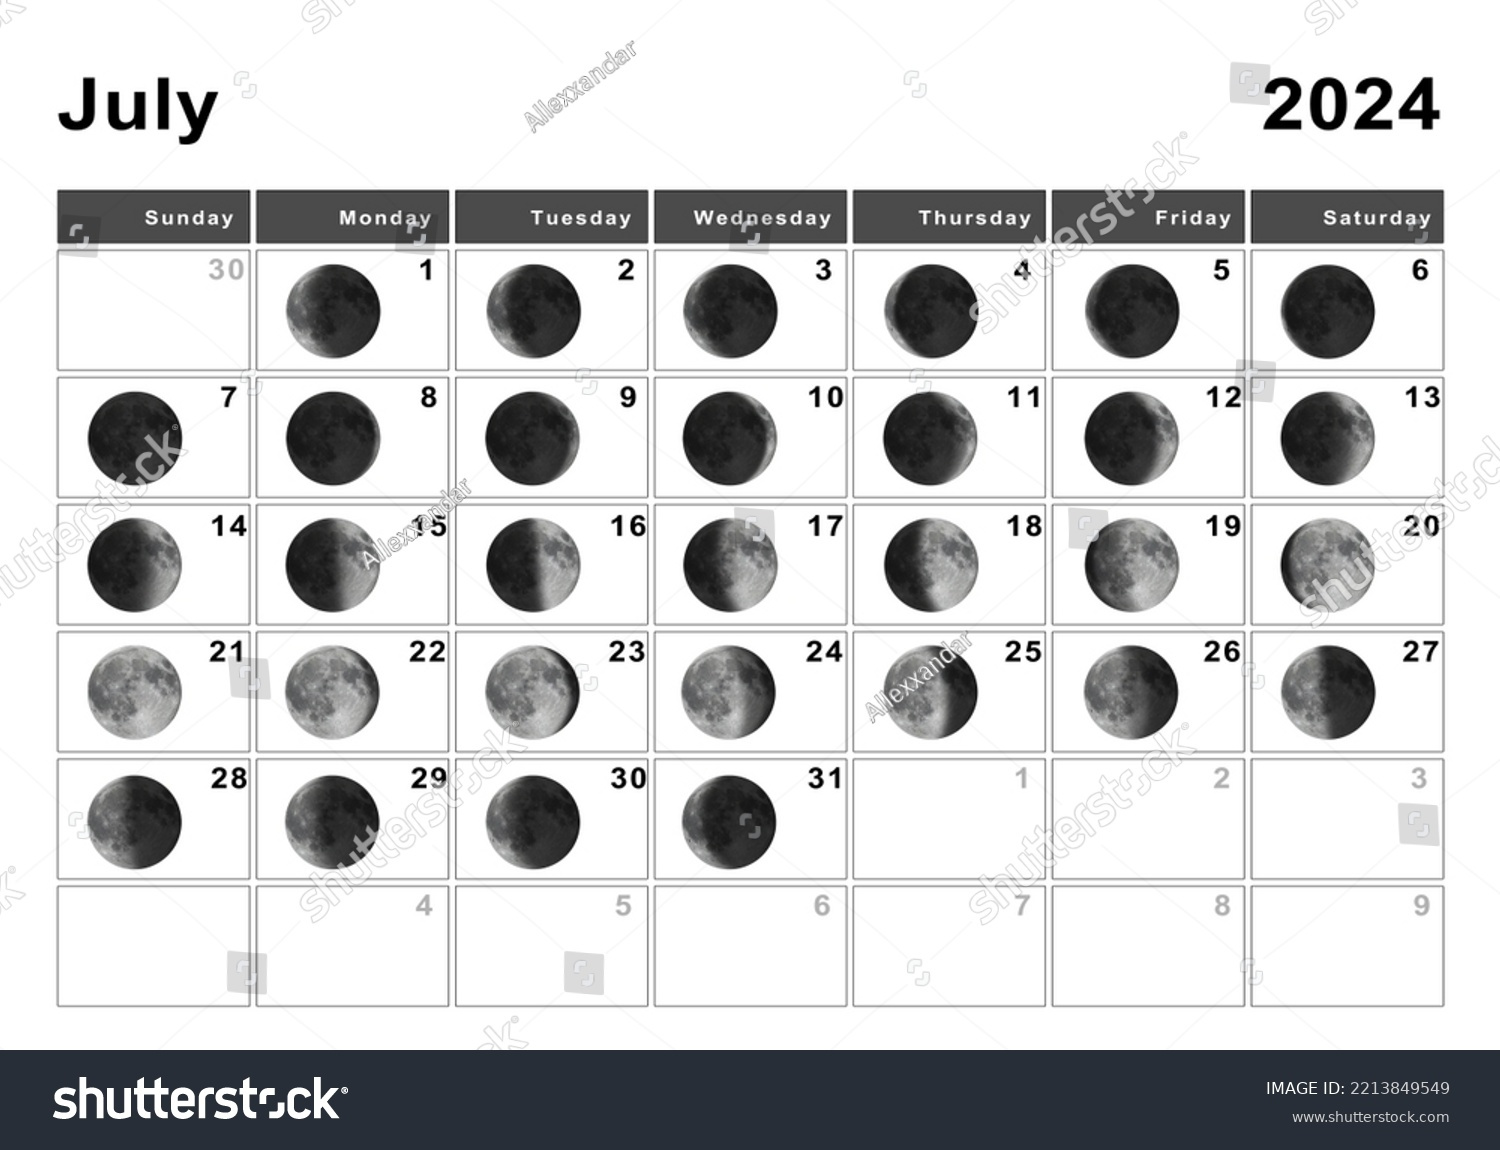 Juli 2024 Mondkalender, Mondzyklen, Mondphasen: Stockillustration with July 7Th Lunar Calendar 2024